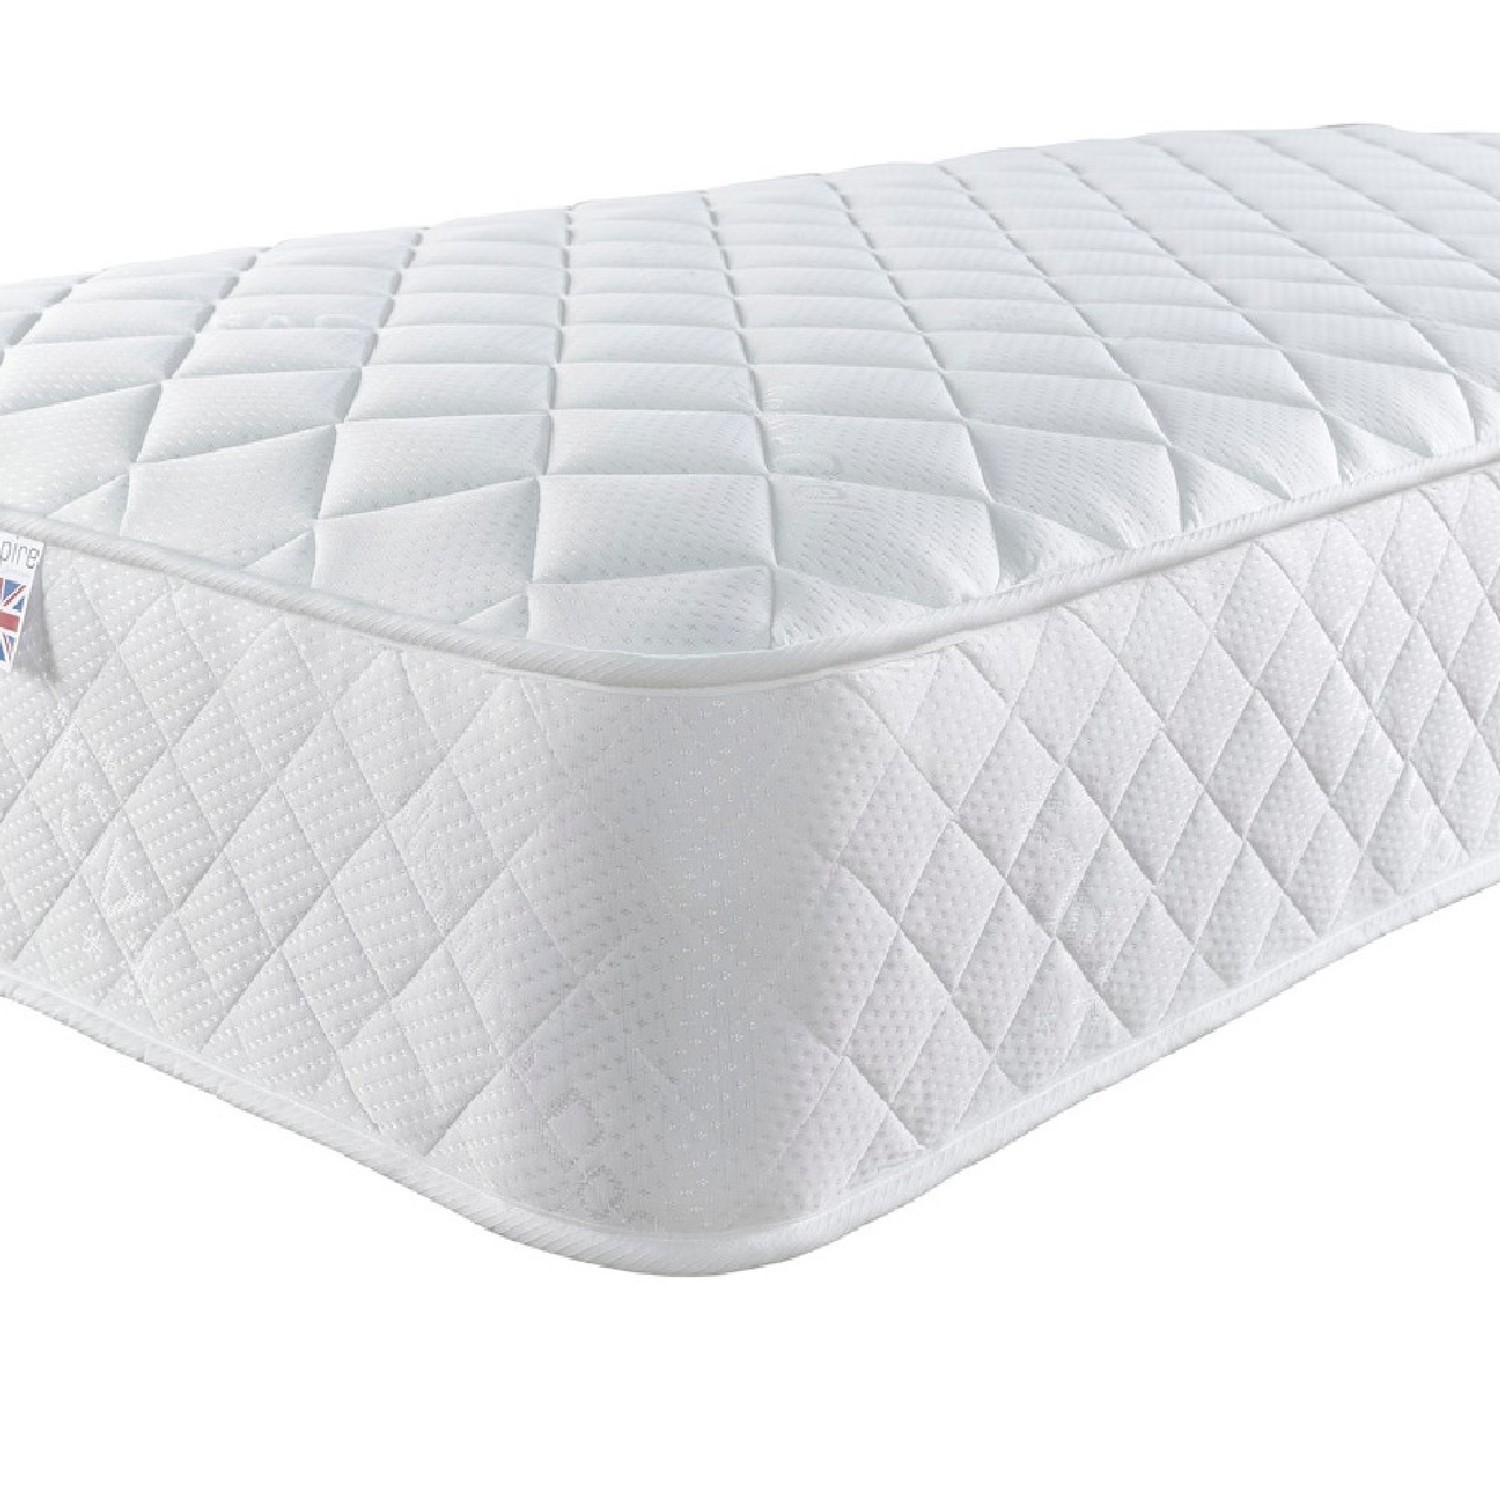 Aspire furniture comfort eco foam free mattress - double